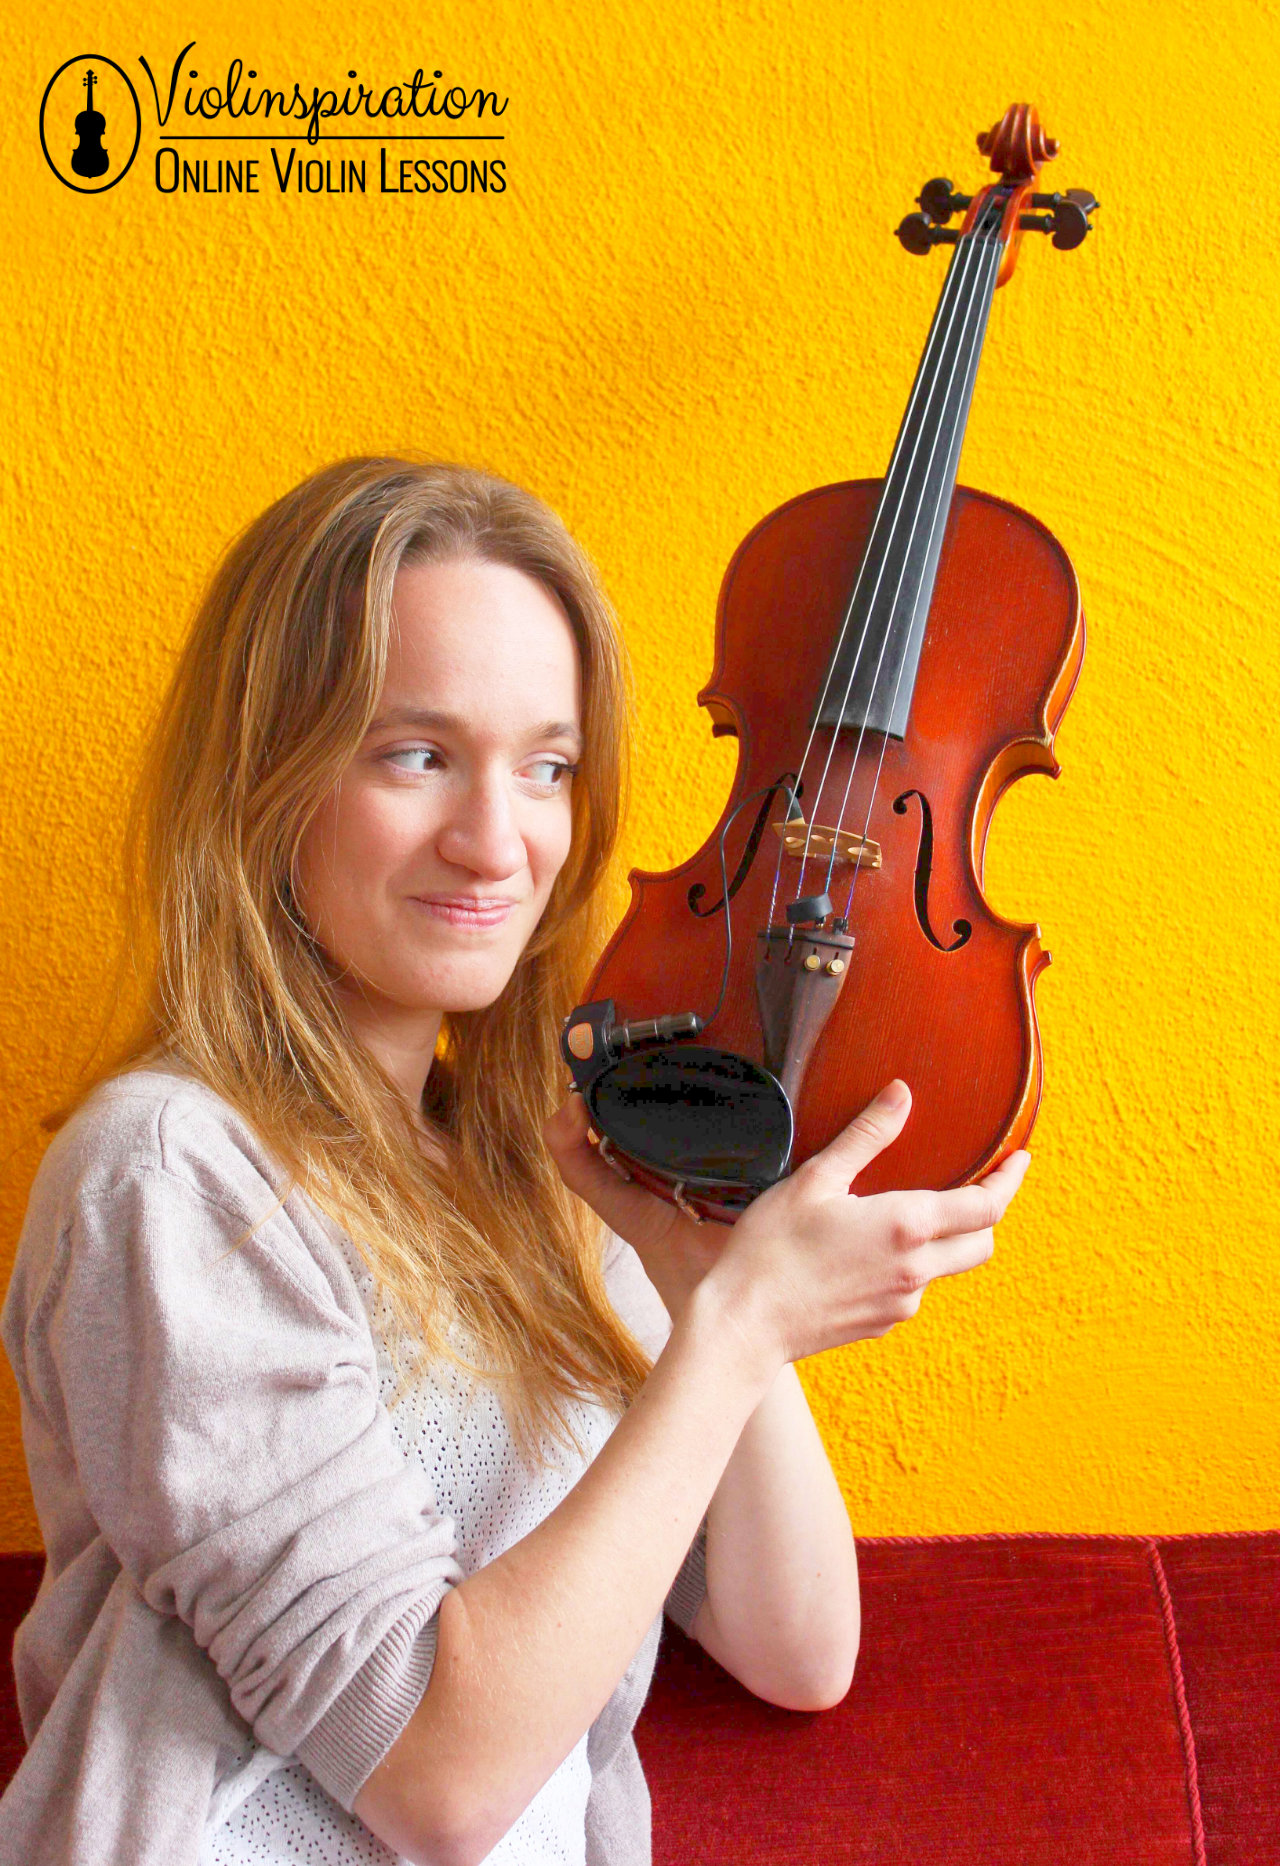 violin pickup - Julia with a violin on a yellow wall - Violinspiration